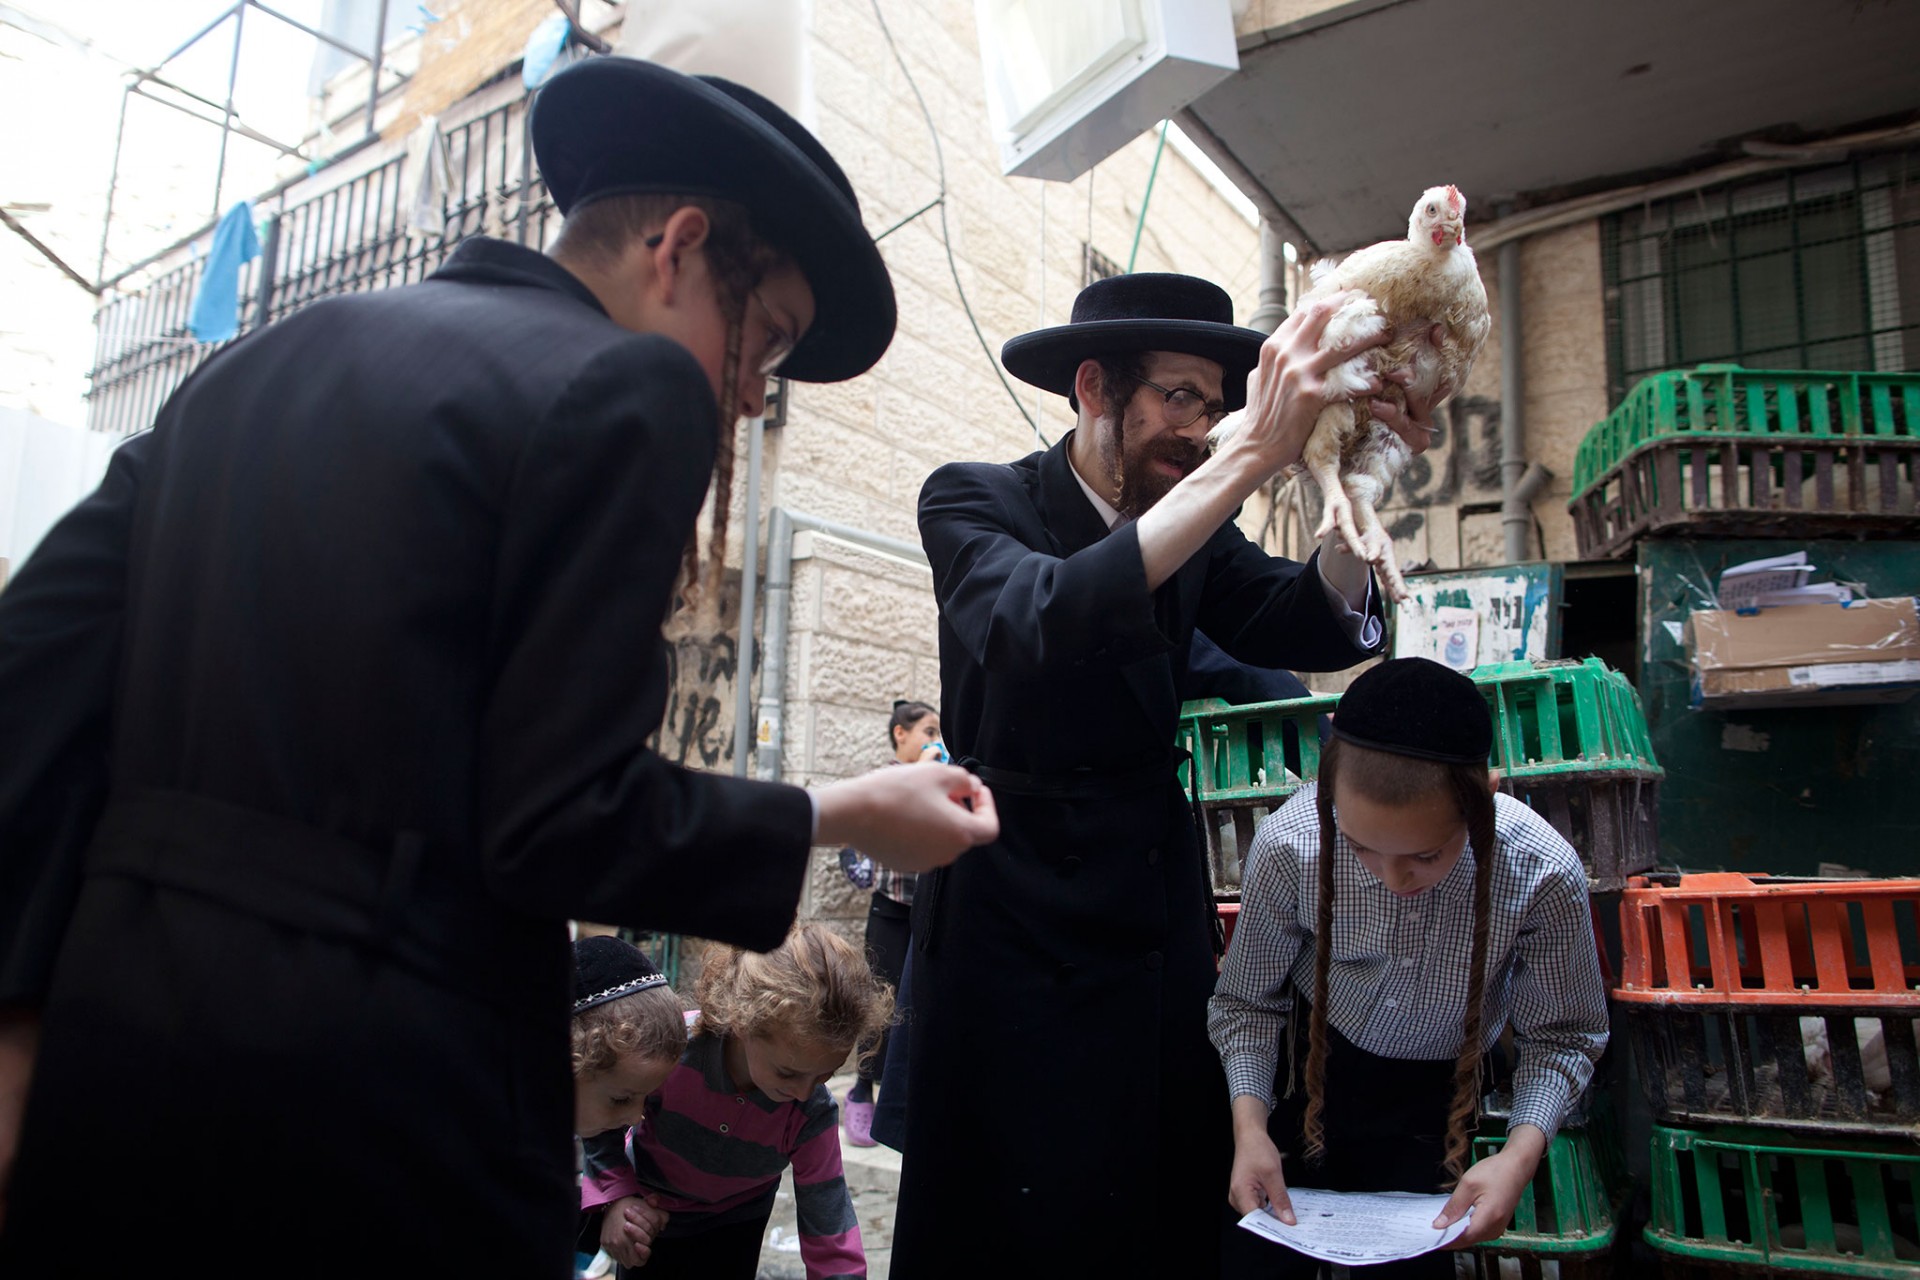 Religious Jews Conduct Kapparot Ceremony Ahead Of Yom Kippur